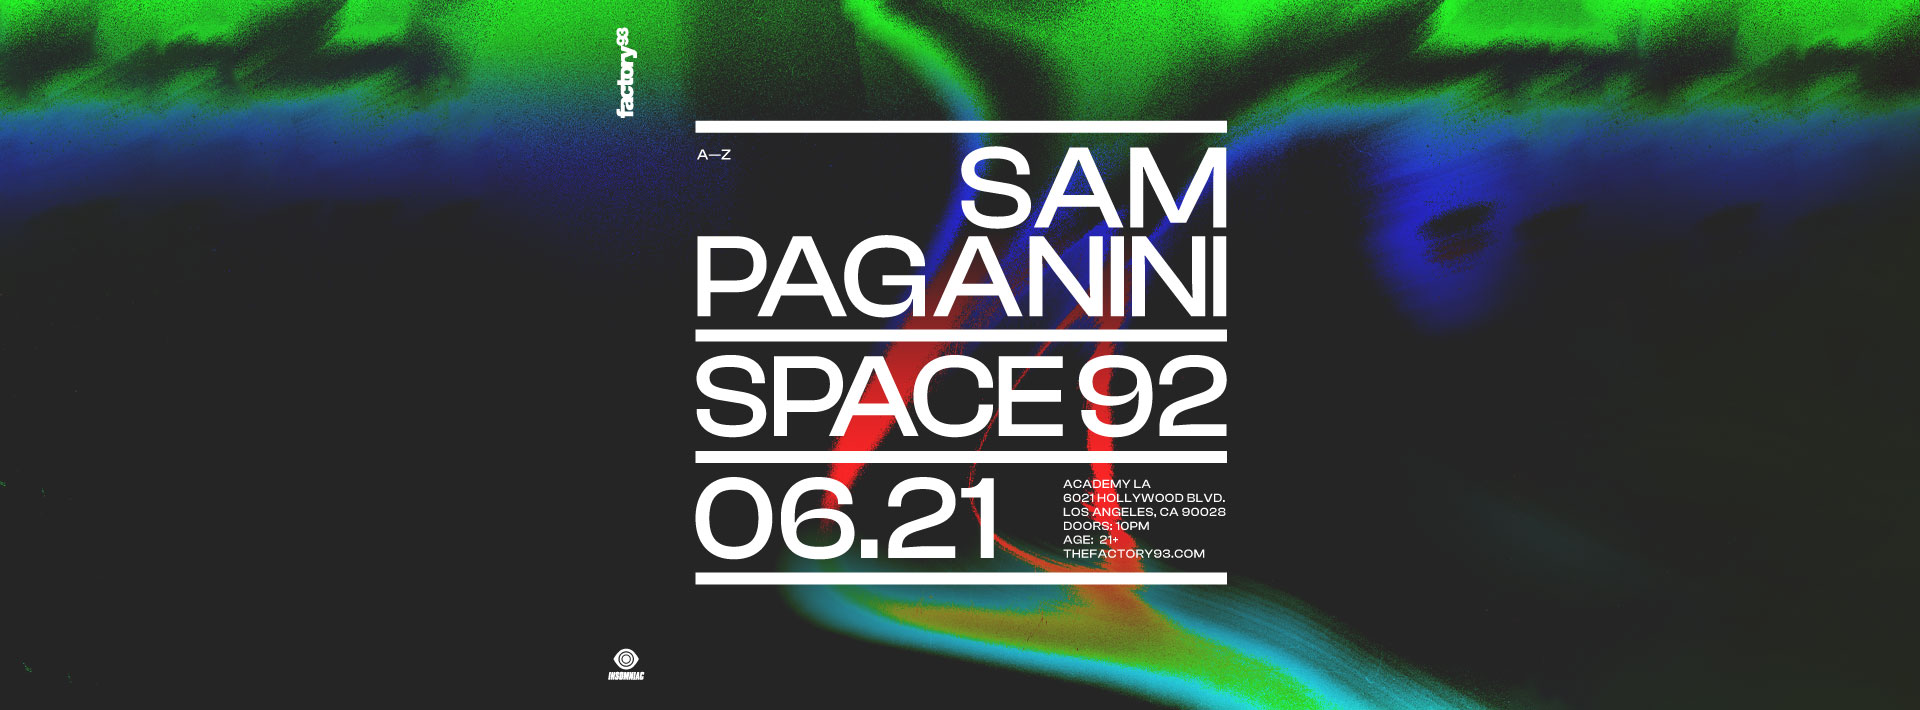 Sam Paganini and Space 92